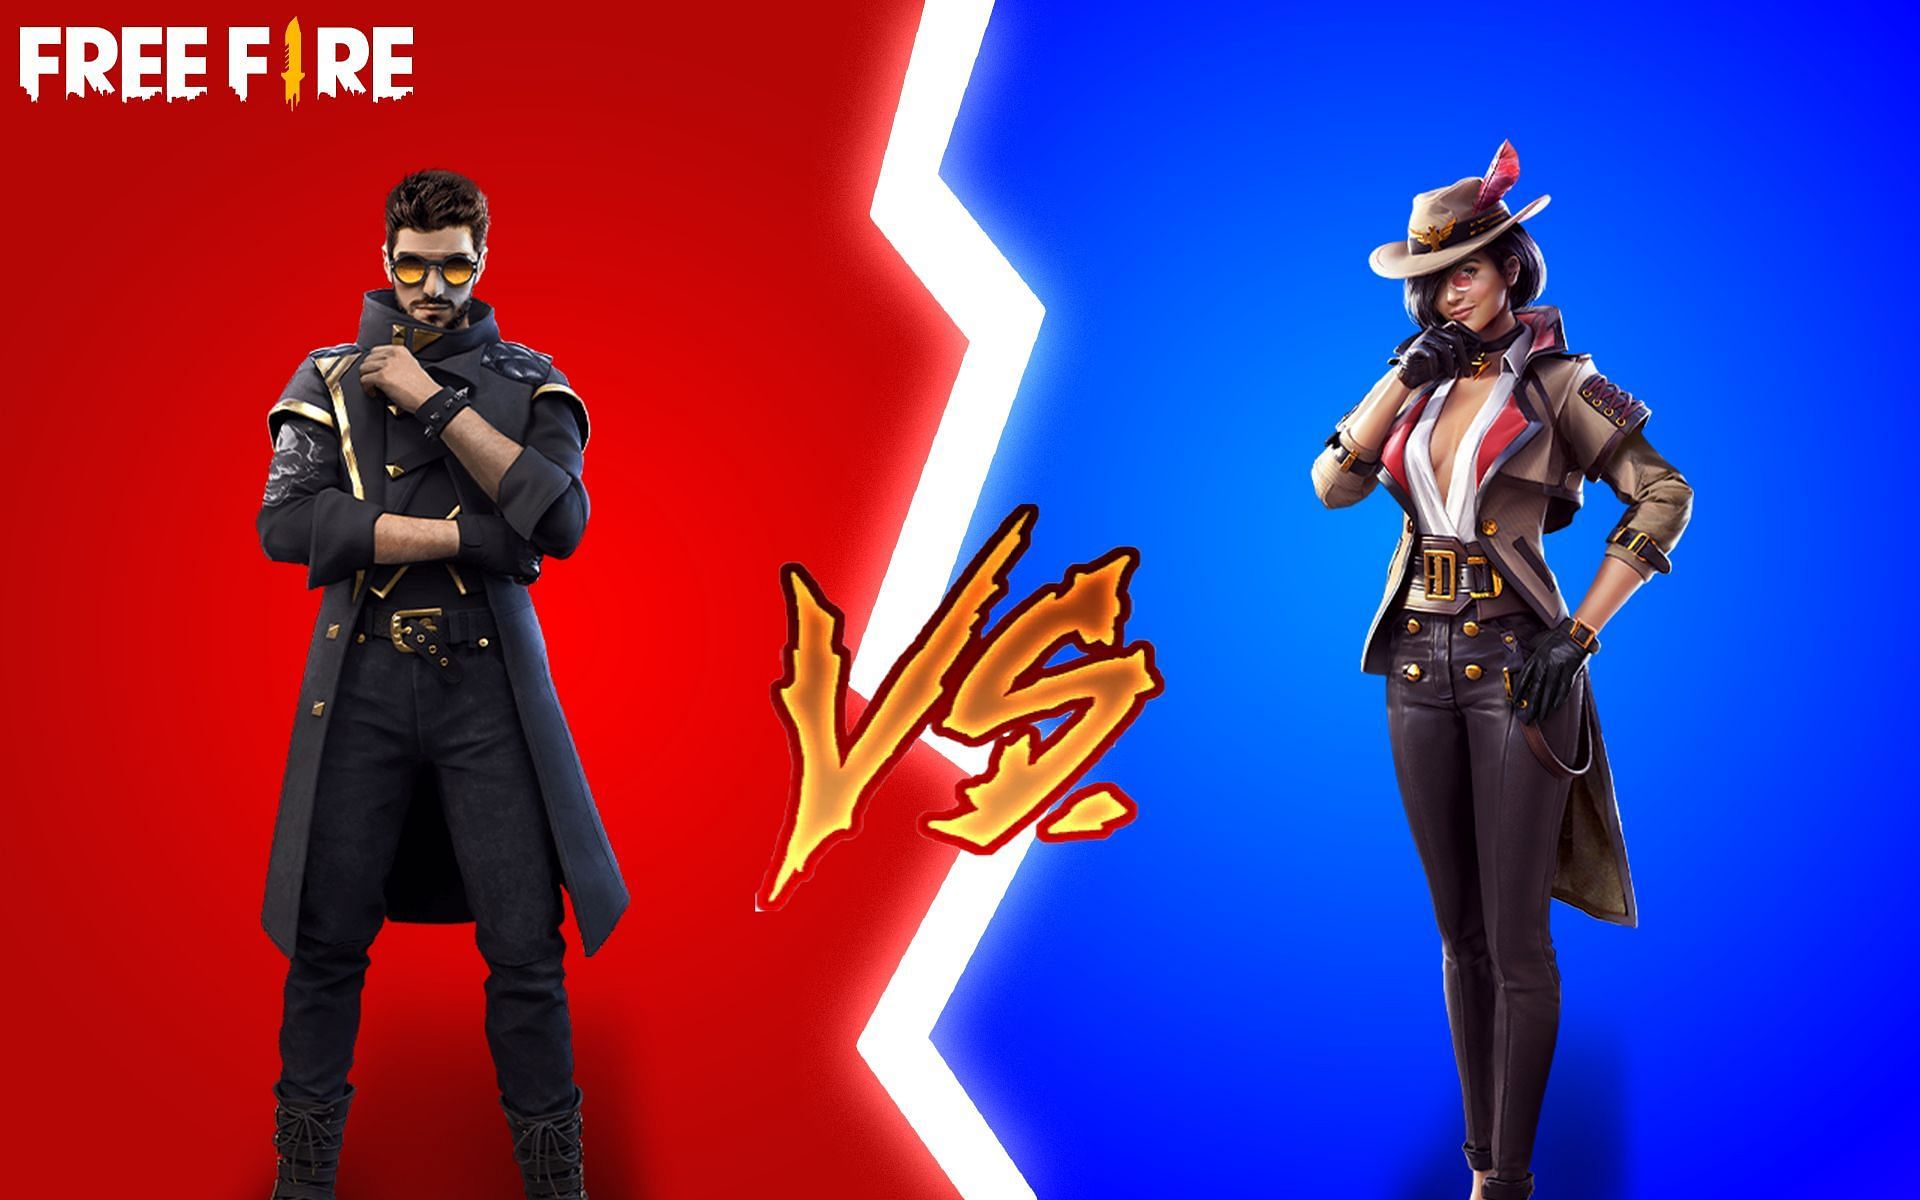 DJ Alok vs Clu: Which Free Fire character is better for strategic gameplay (Image via Sportskeeda)